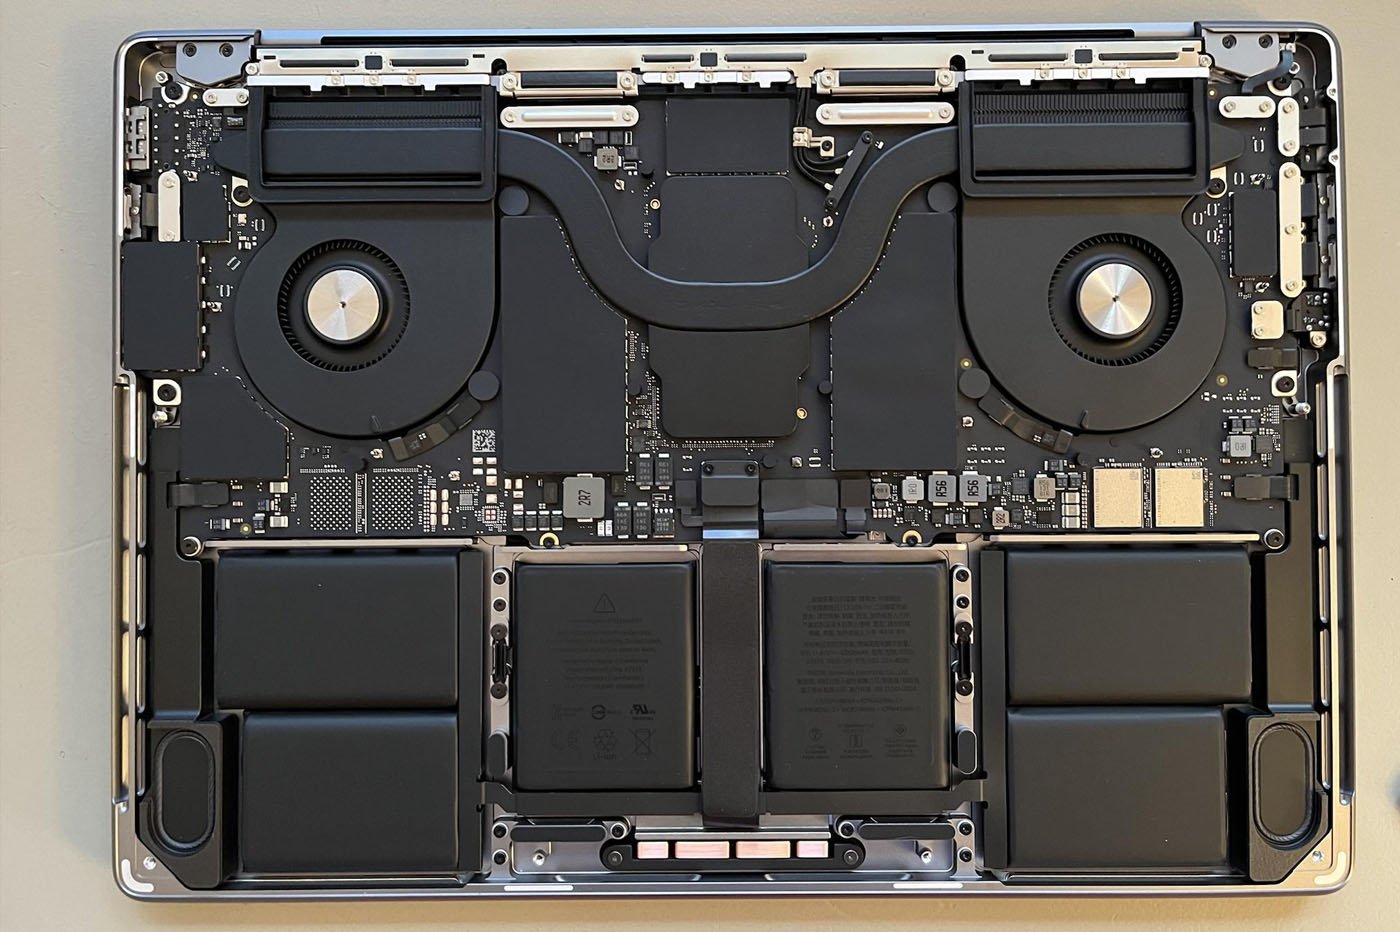 MacBook Pro M1 Pro